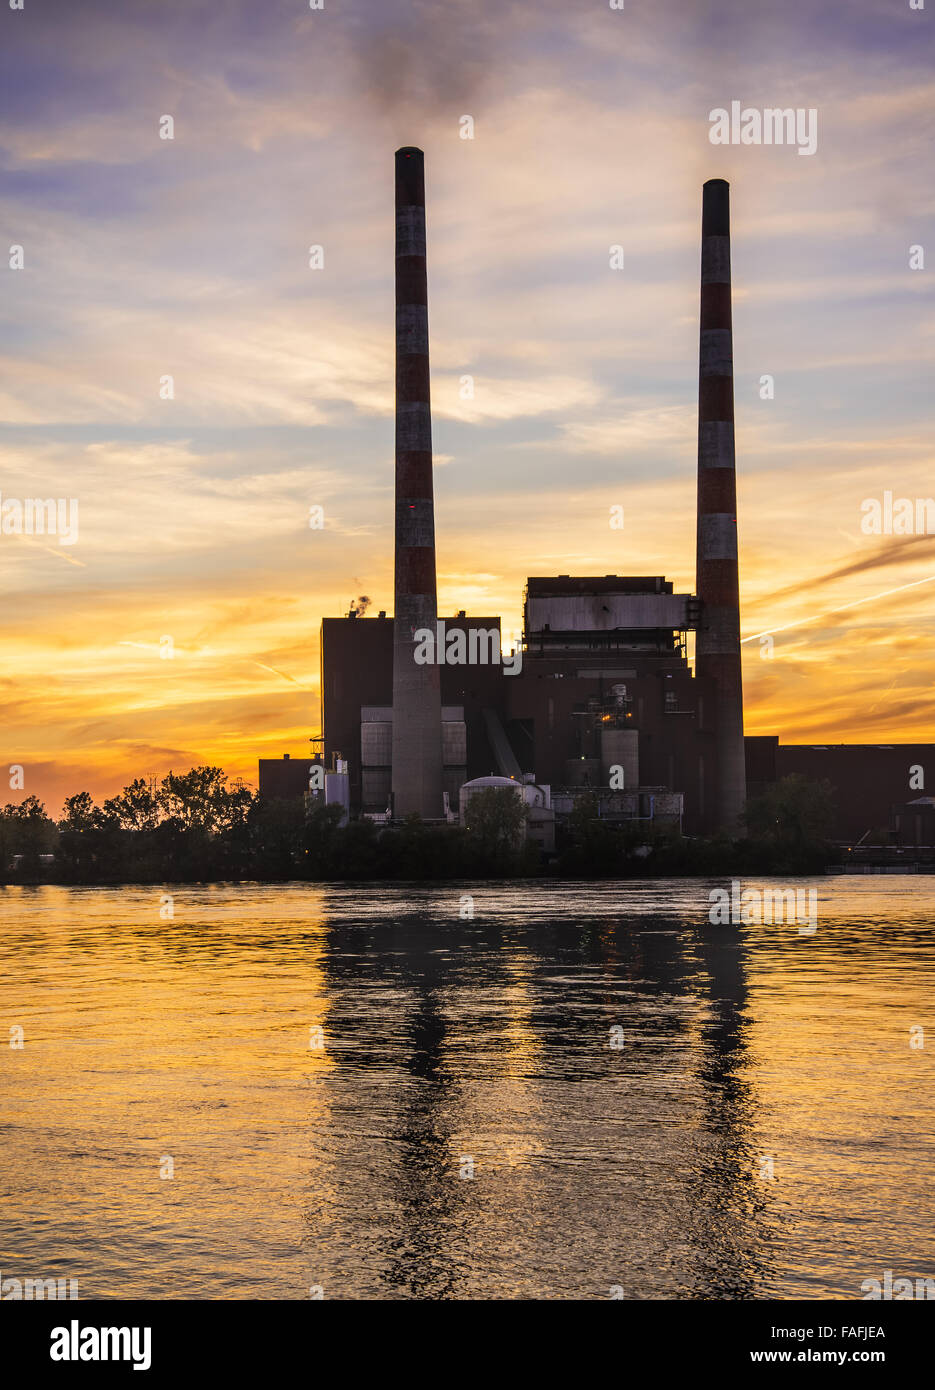 Tall Detroit Edison power plant smoke stacks at Sunset Stock Photo